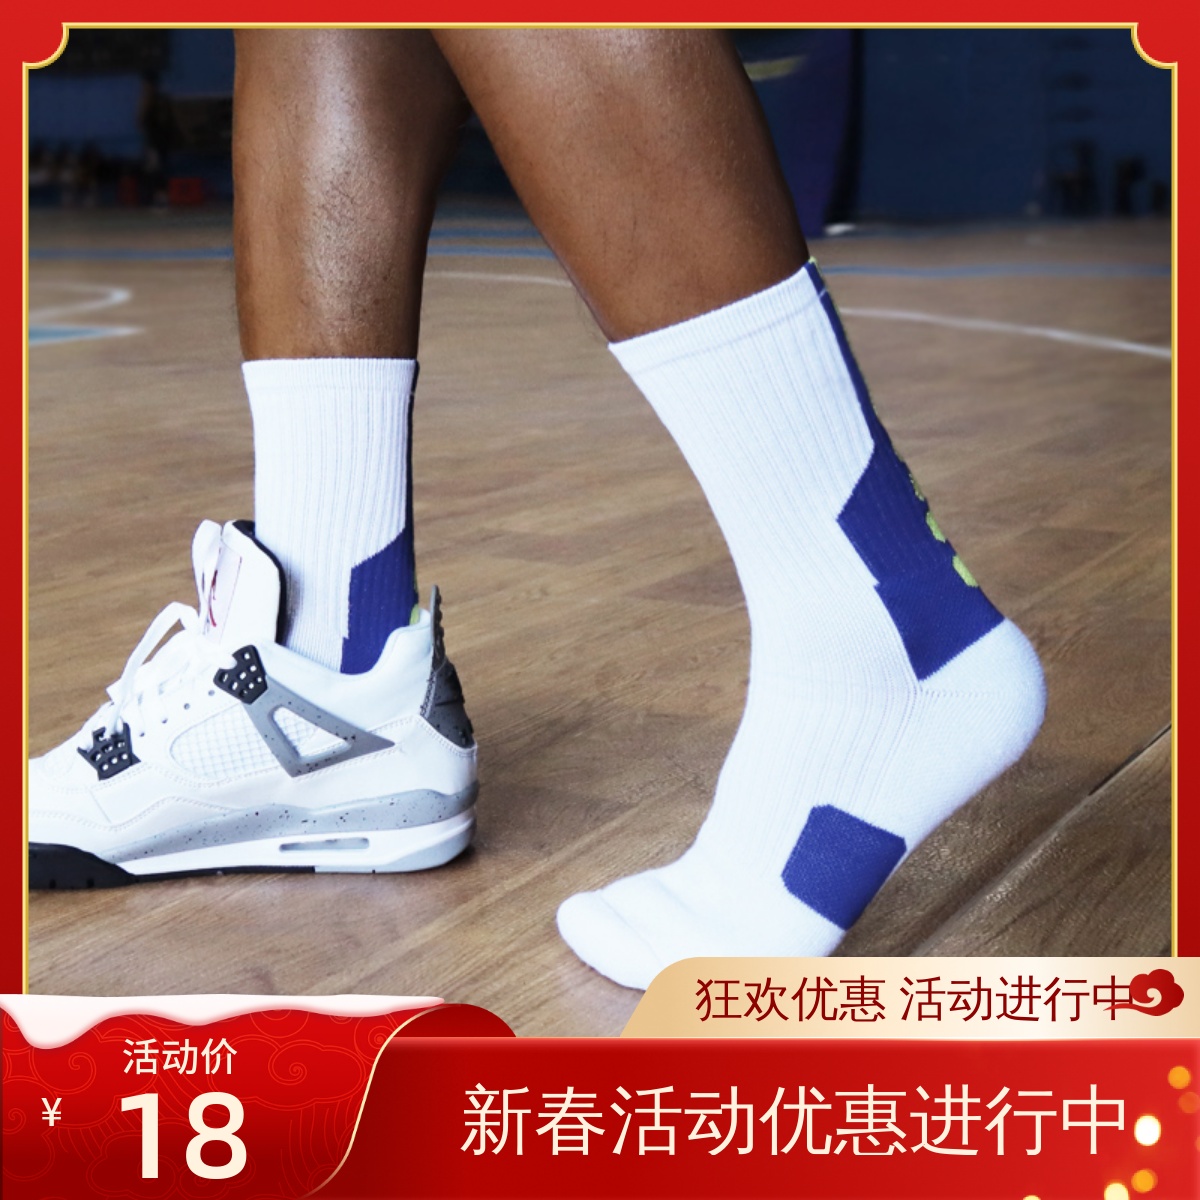 PAUKAOT 篮球袜男士中筒跑步专业训练徒步透气毛巾底精英运动袜子 实战蓝色中筒袜